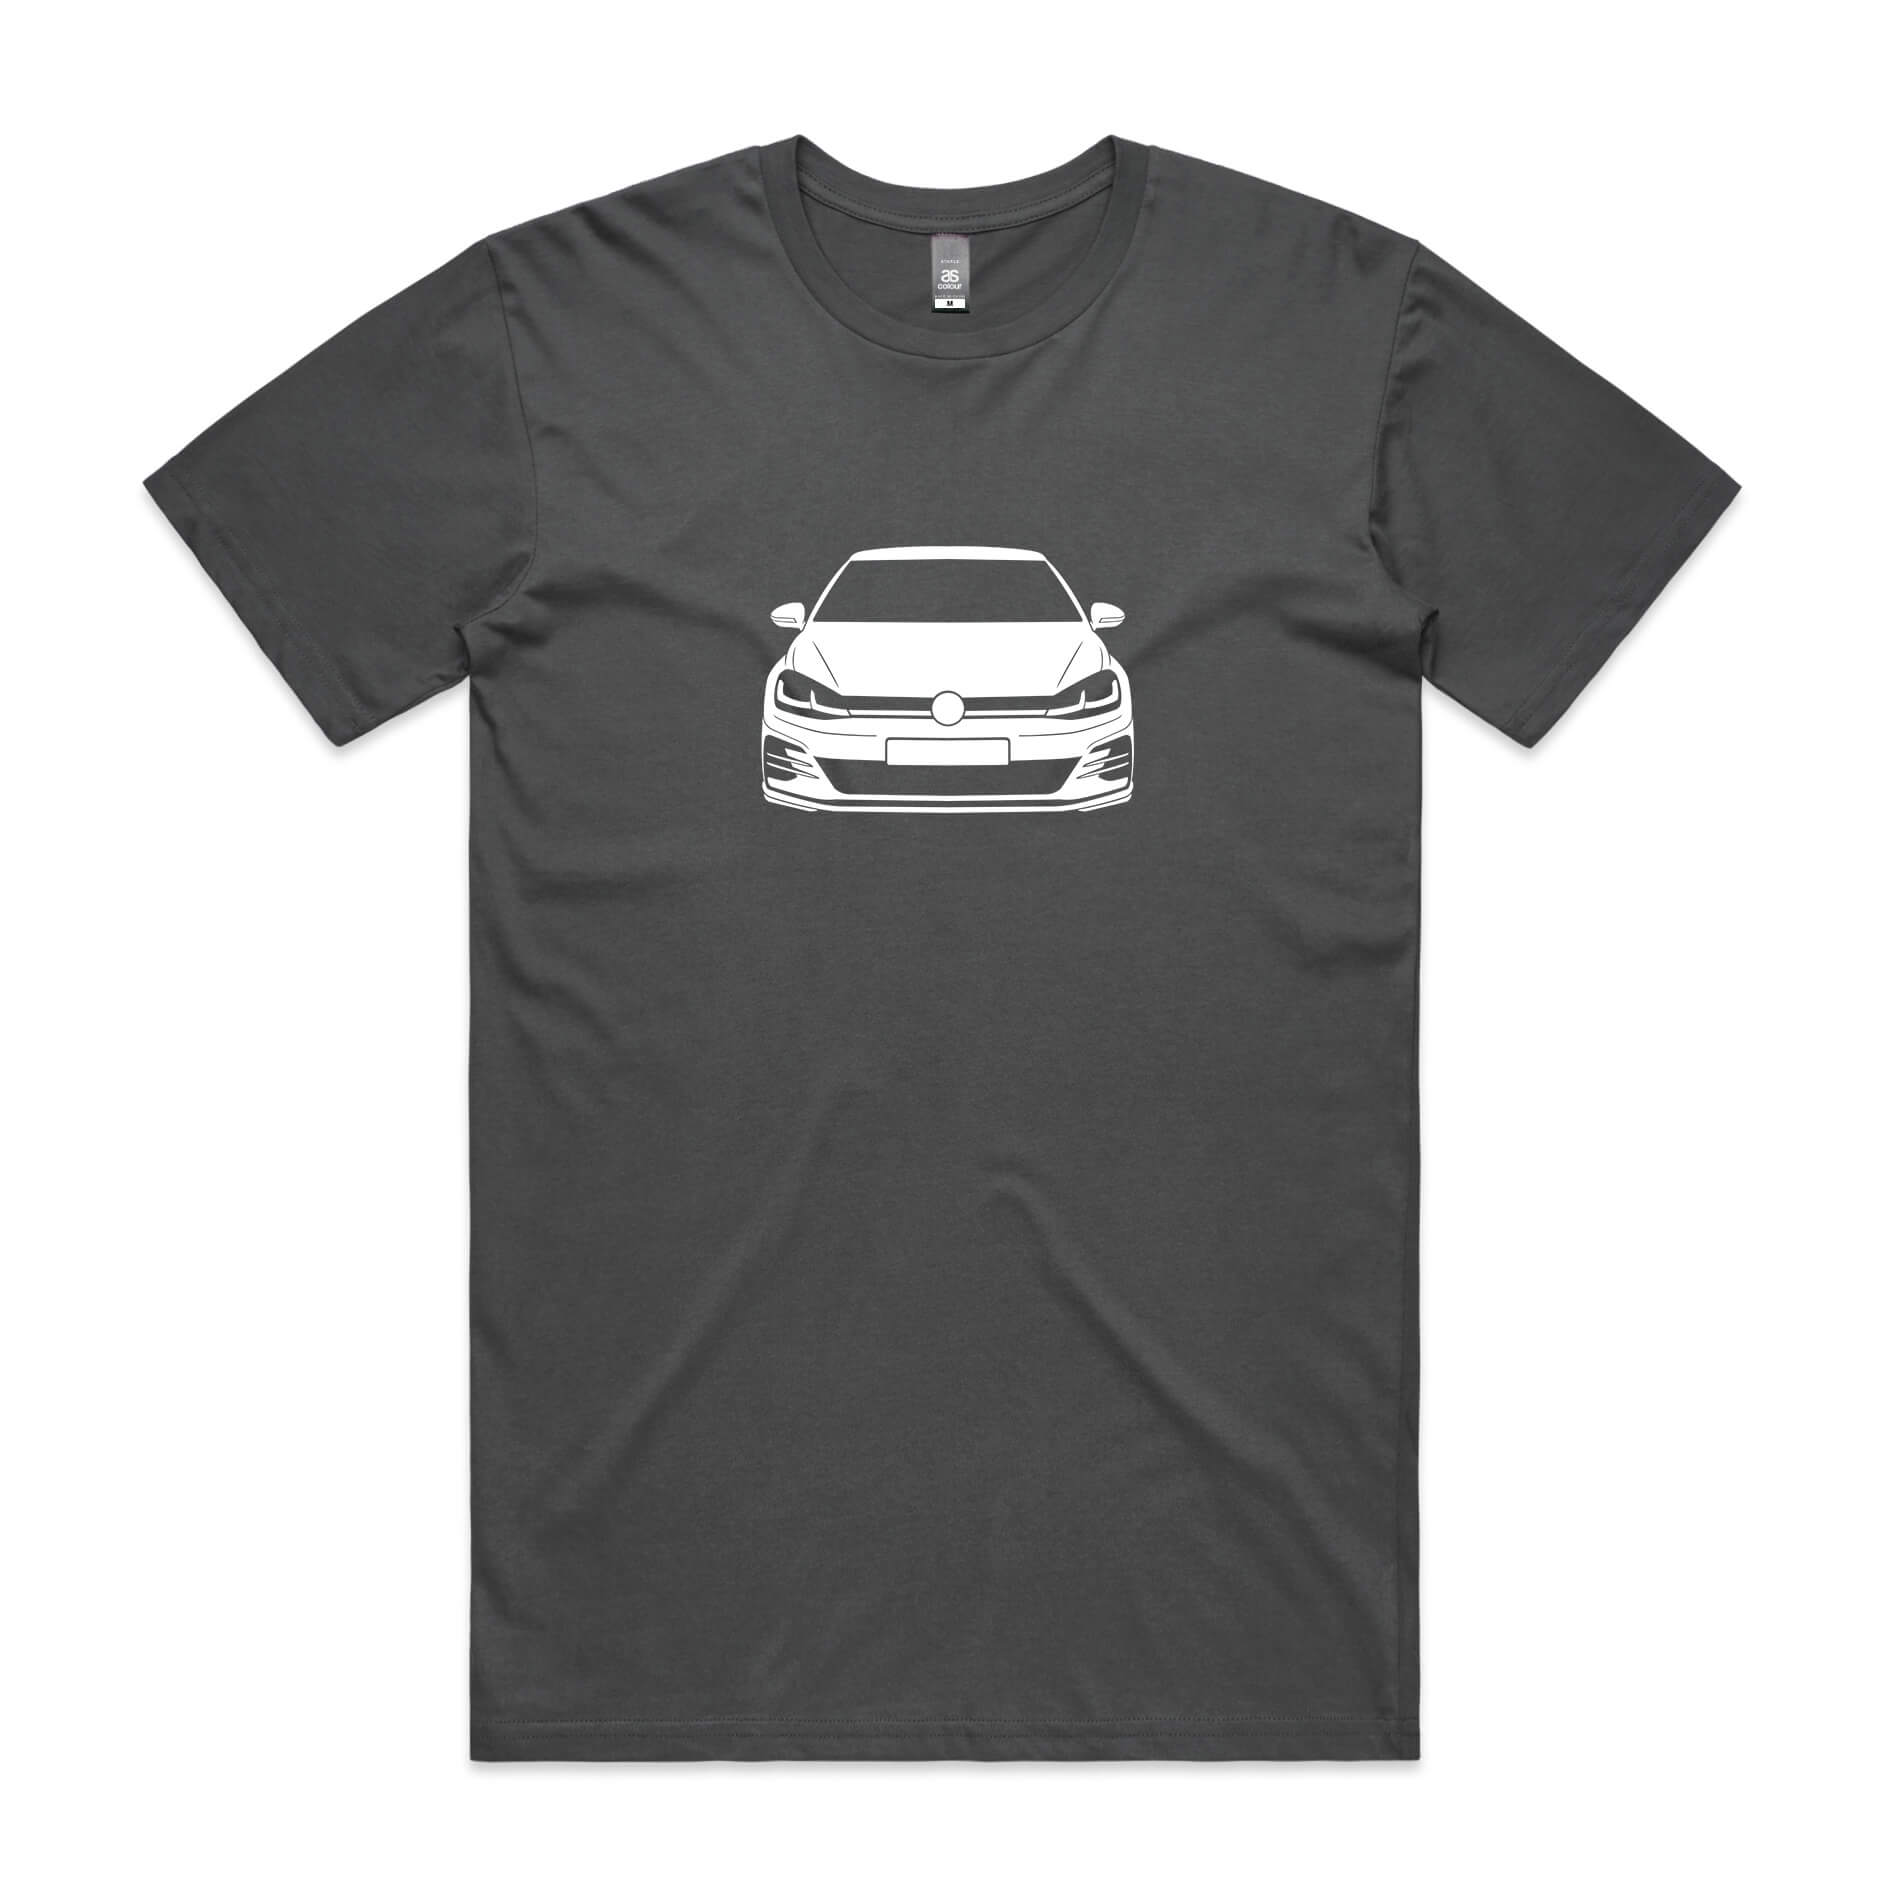 VW Golf GTi t-shirt in charcoal grey